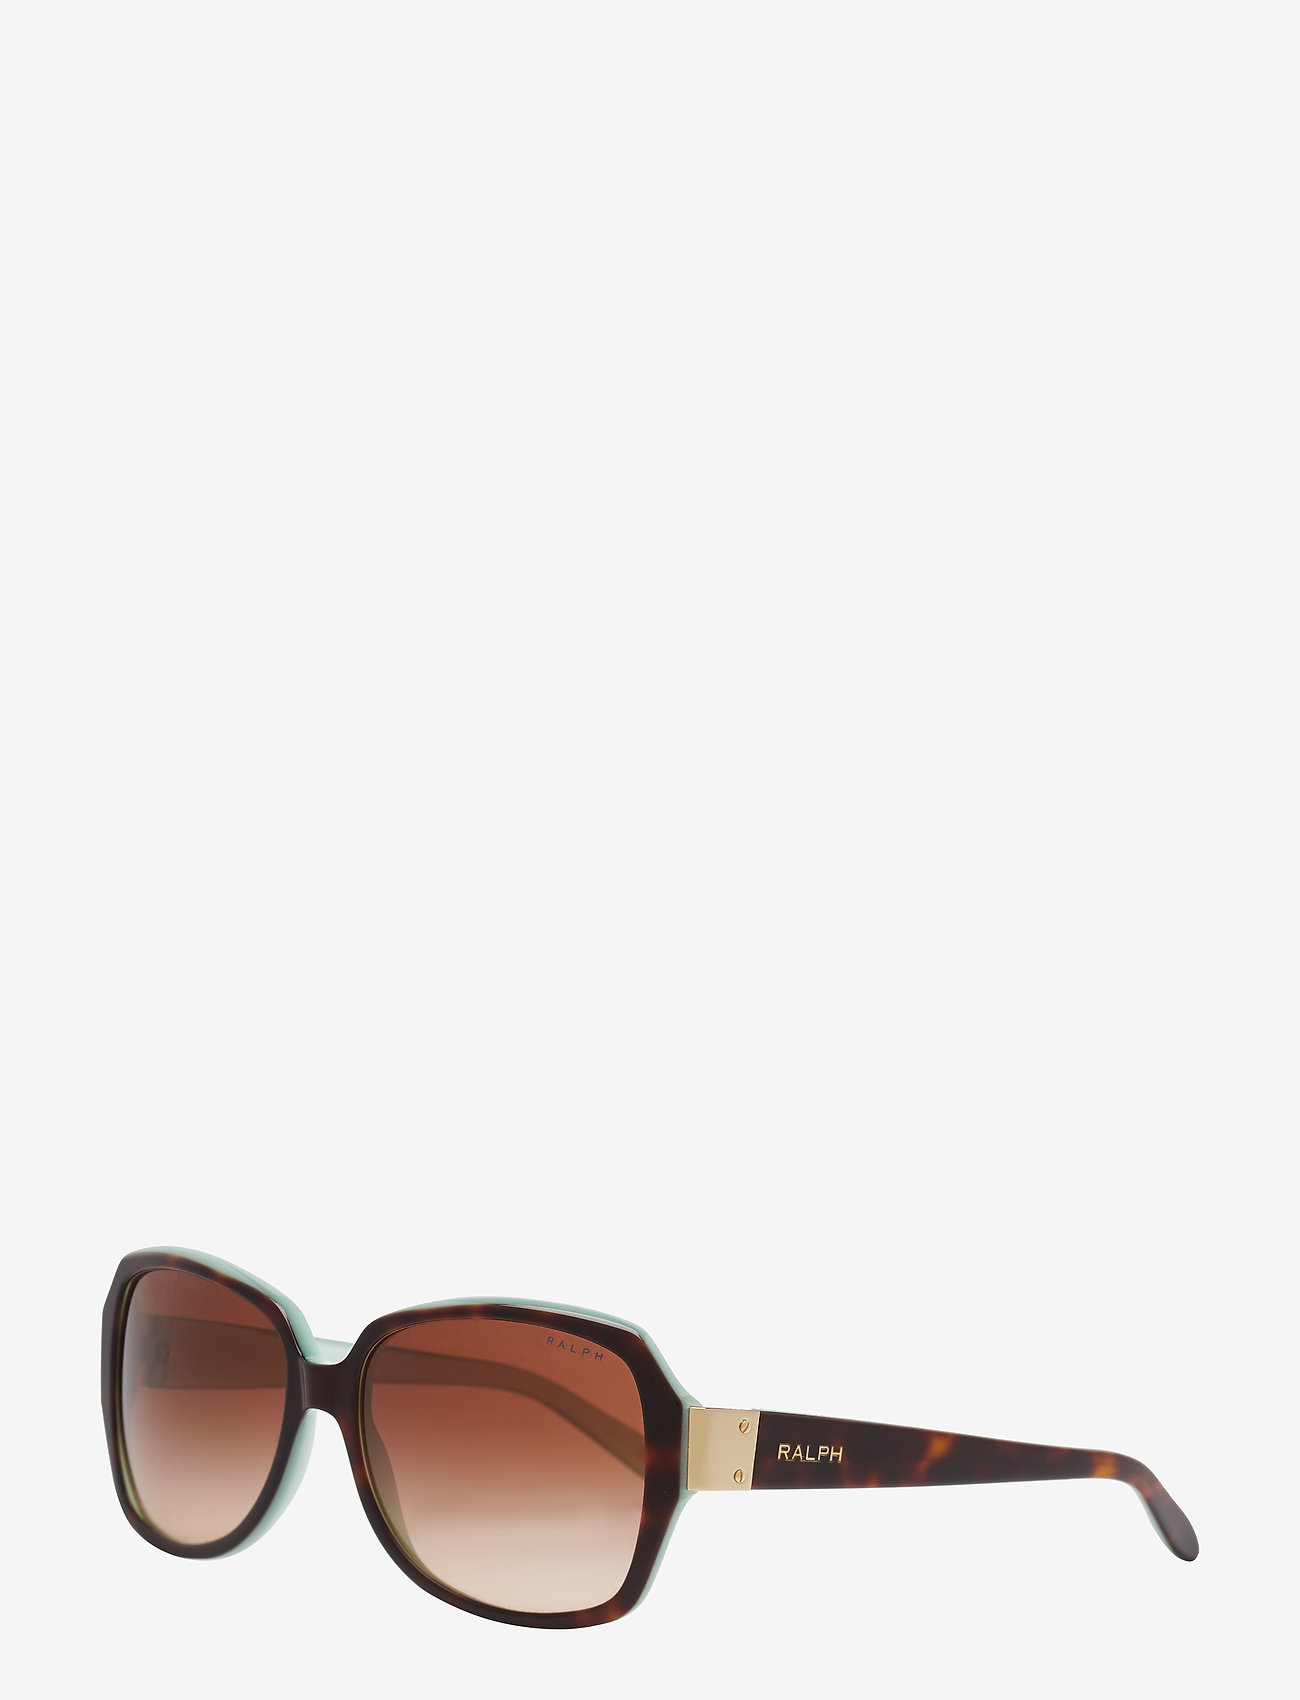 Ralph Ralph Lauren Sunglasses - 0RA5138 - kandilise raamiga - tortoise/turquoise - 1